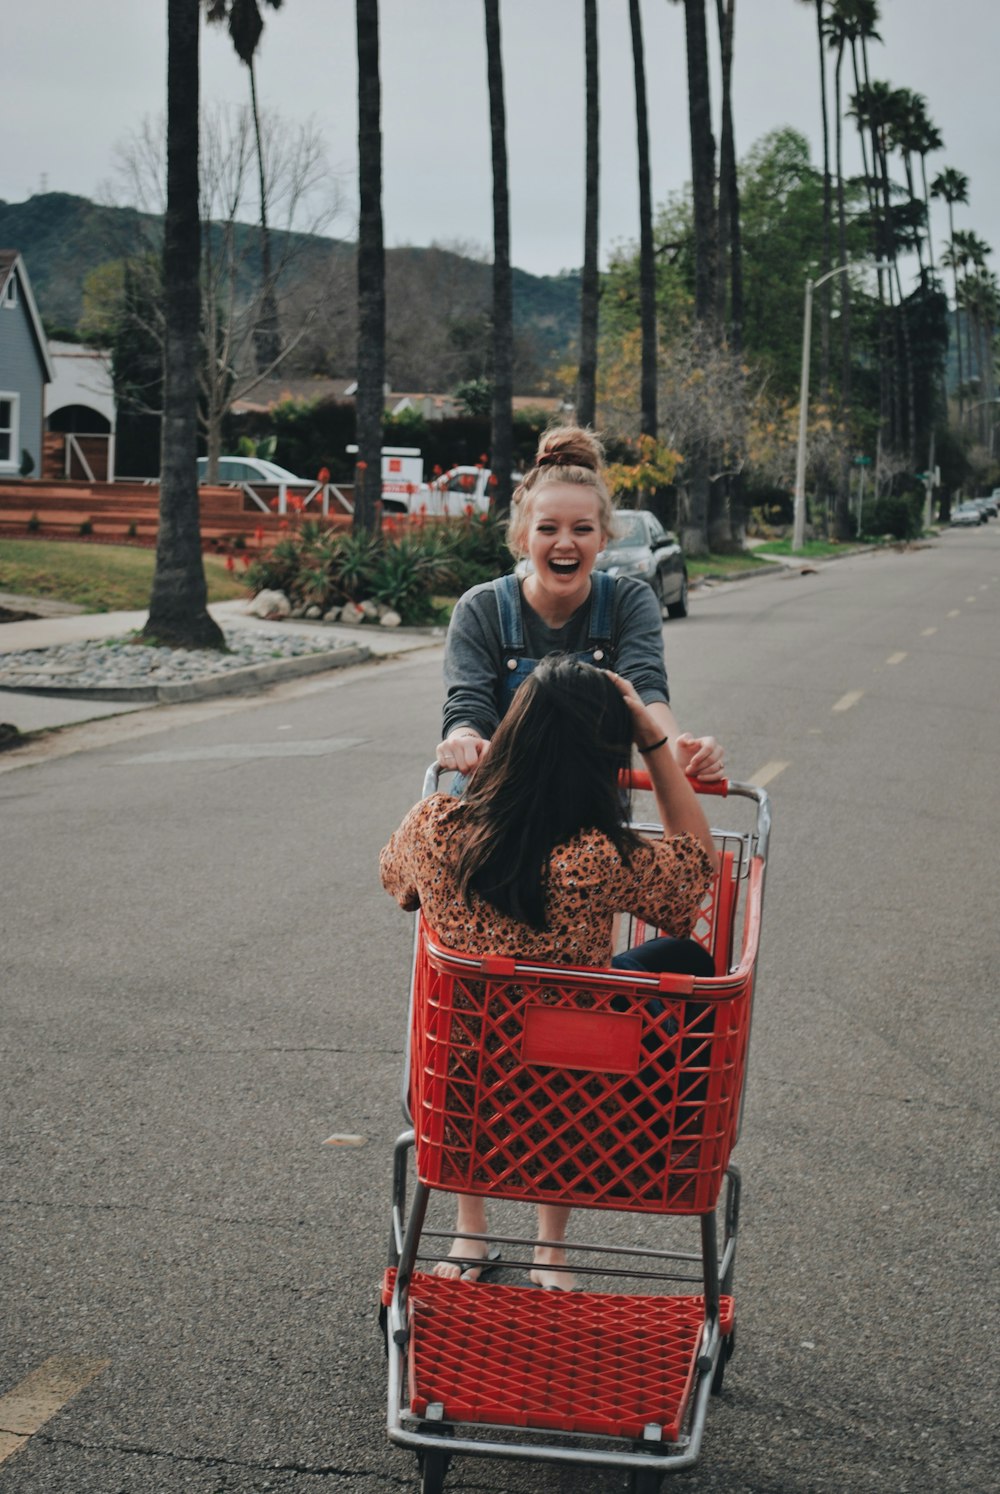 woman pushing shopping cart with woman riding in it